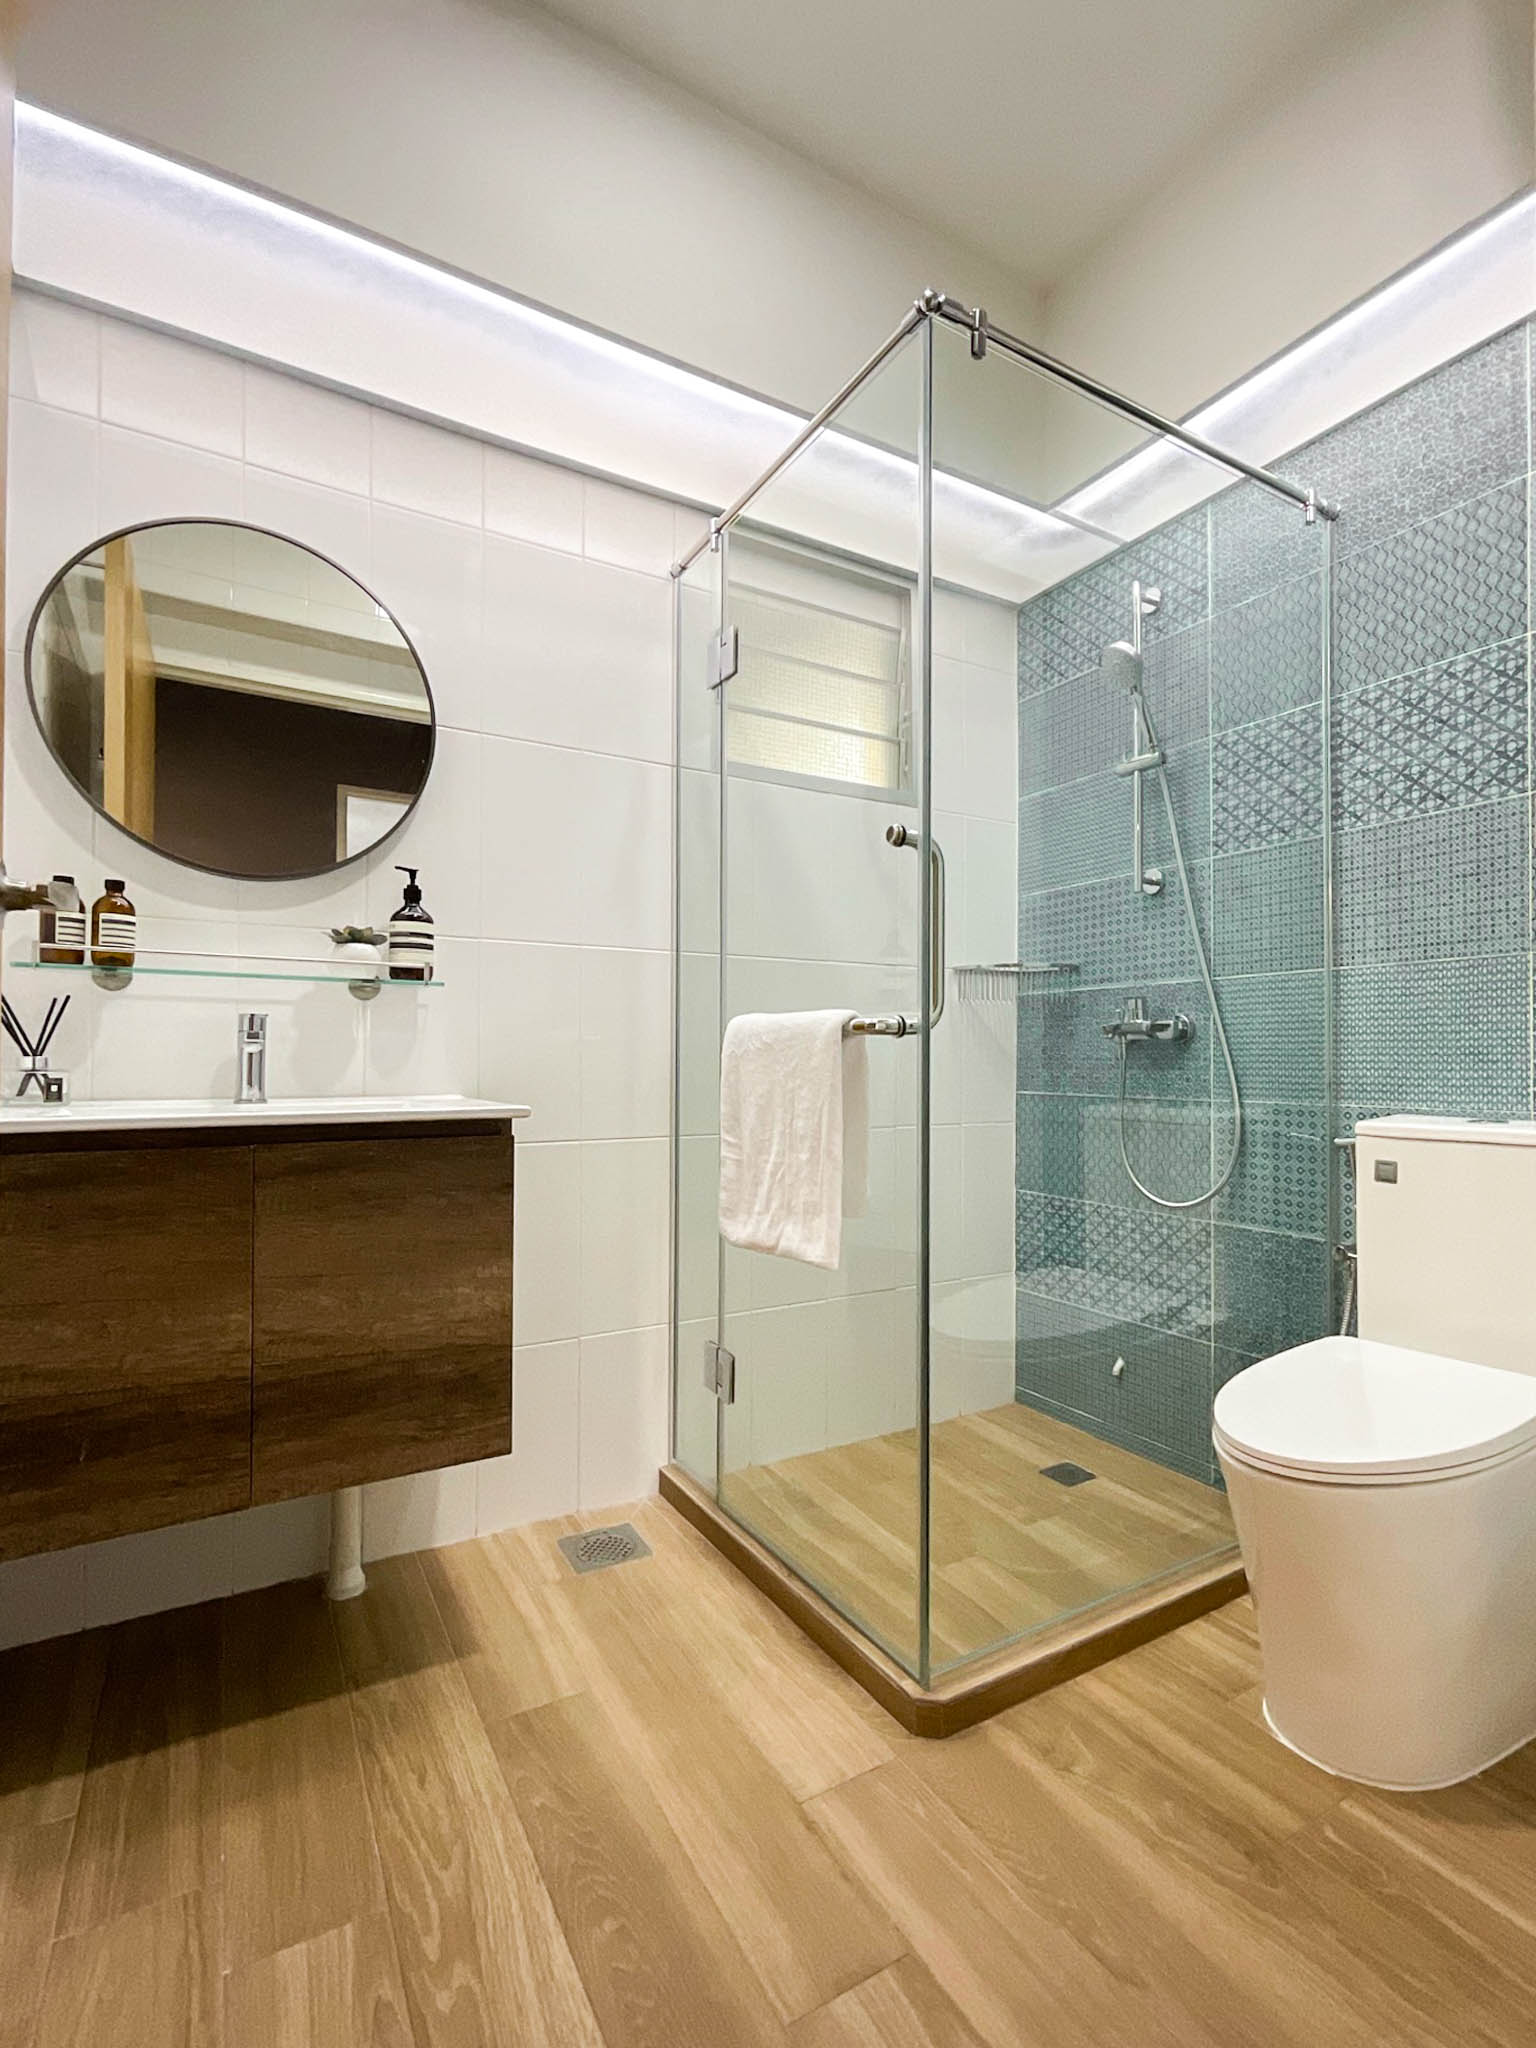 Clementi Ridges HDB Bathroom Renovation Design